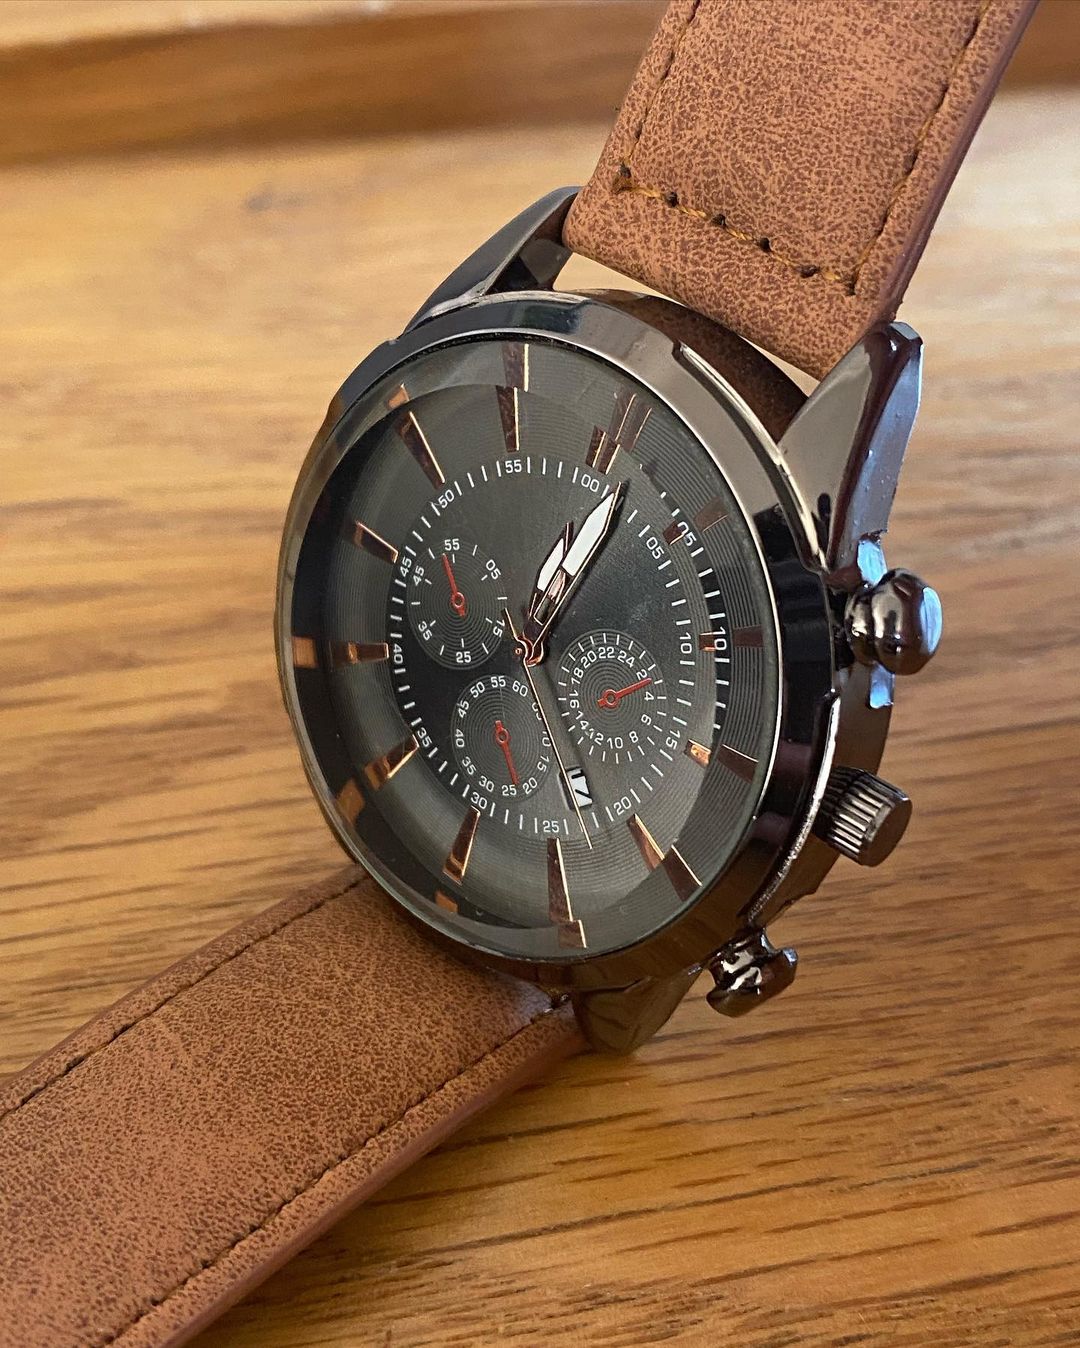 Super vintage style watch (new)